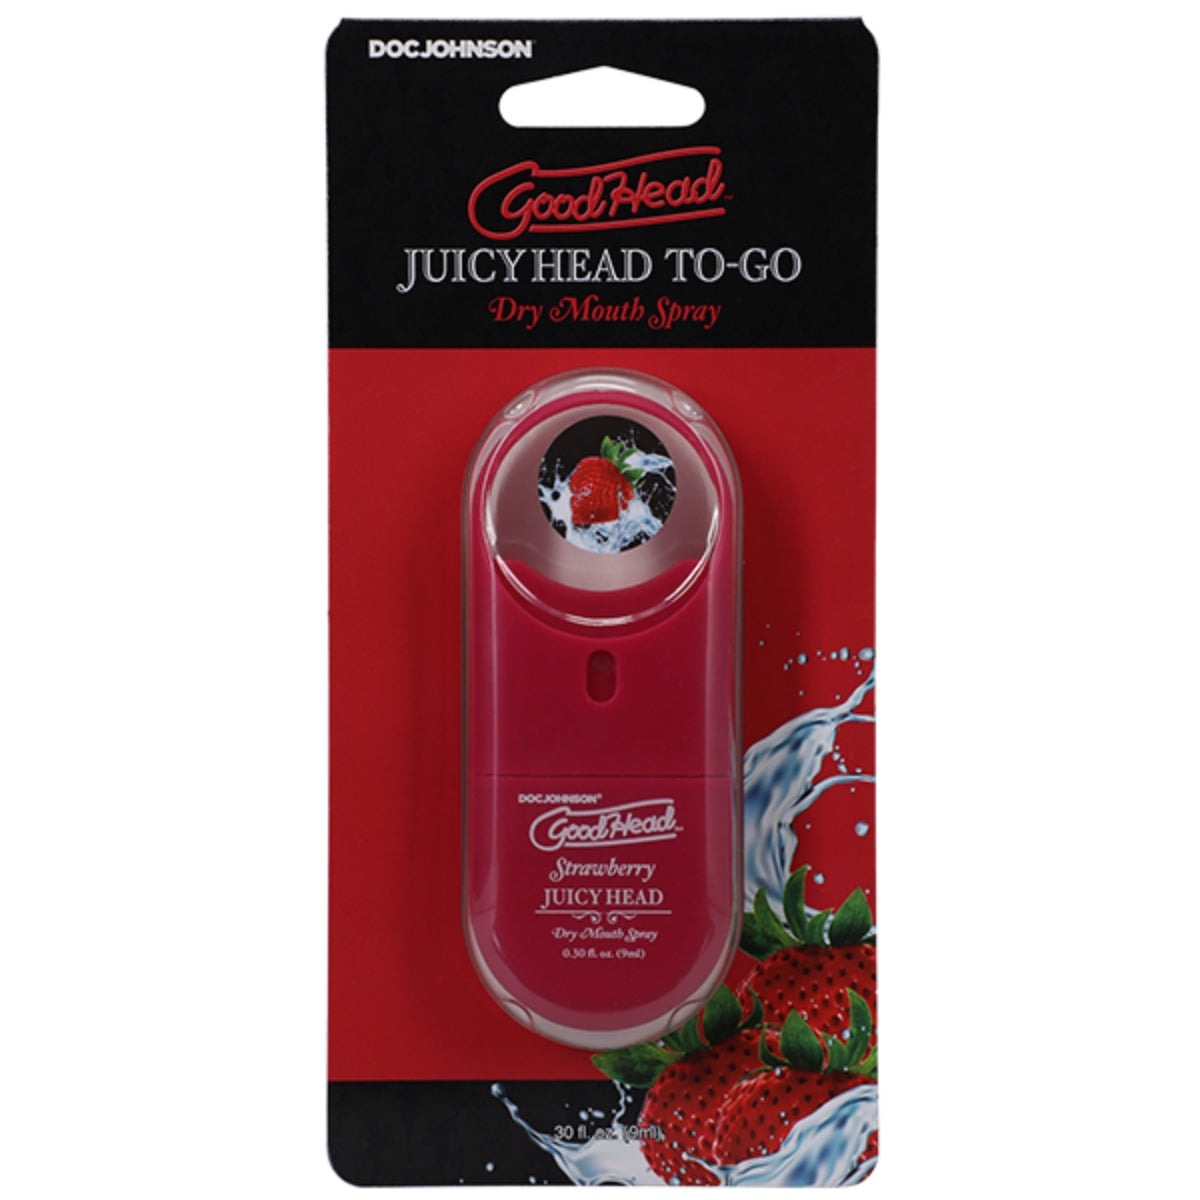 Goodhead | Juicy Head Dry Mouth Spray To-Go Strawberry - 0.30 fl oz